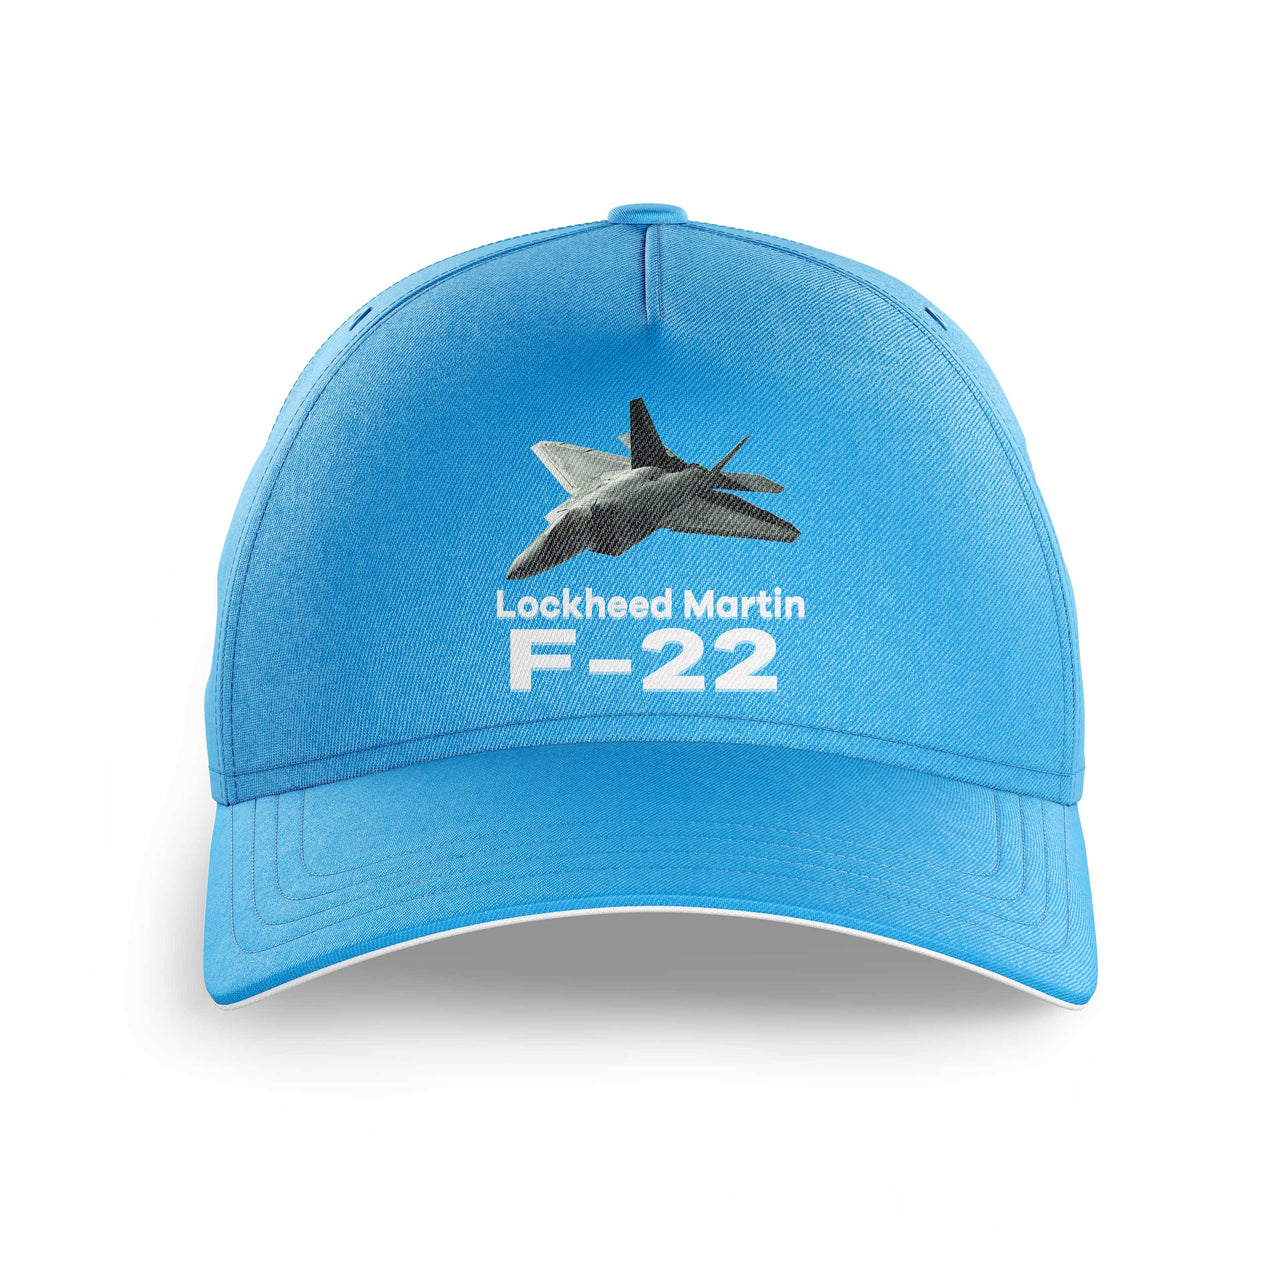 The Lockheed Martin F22 Printed Hats